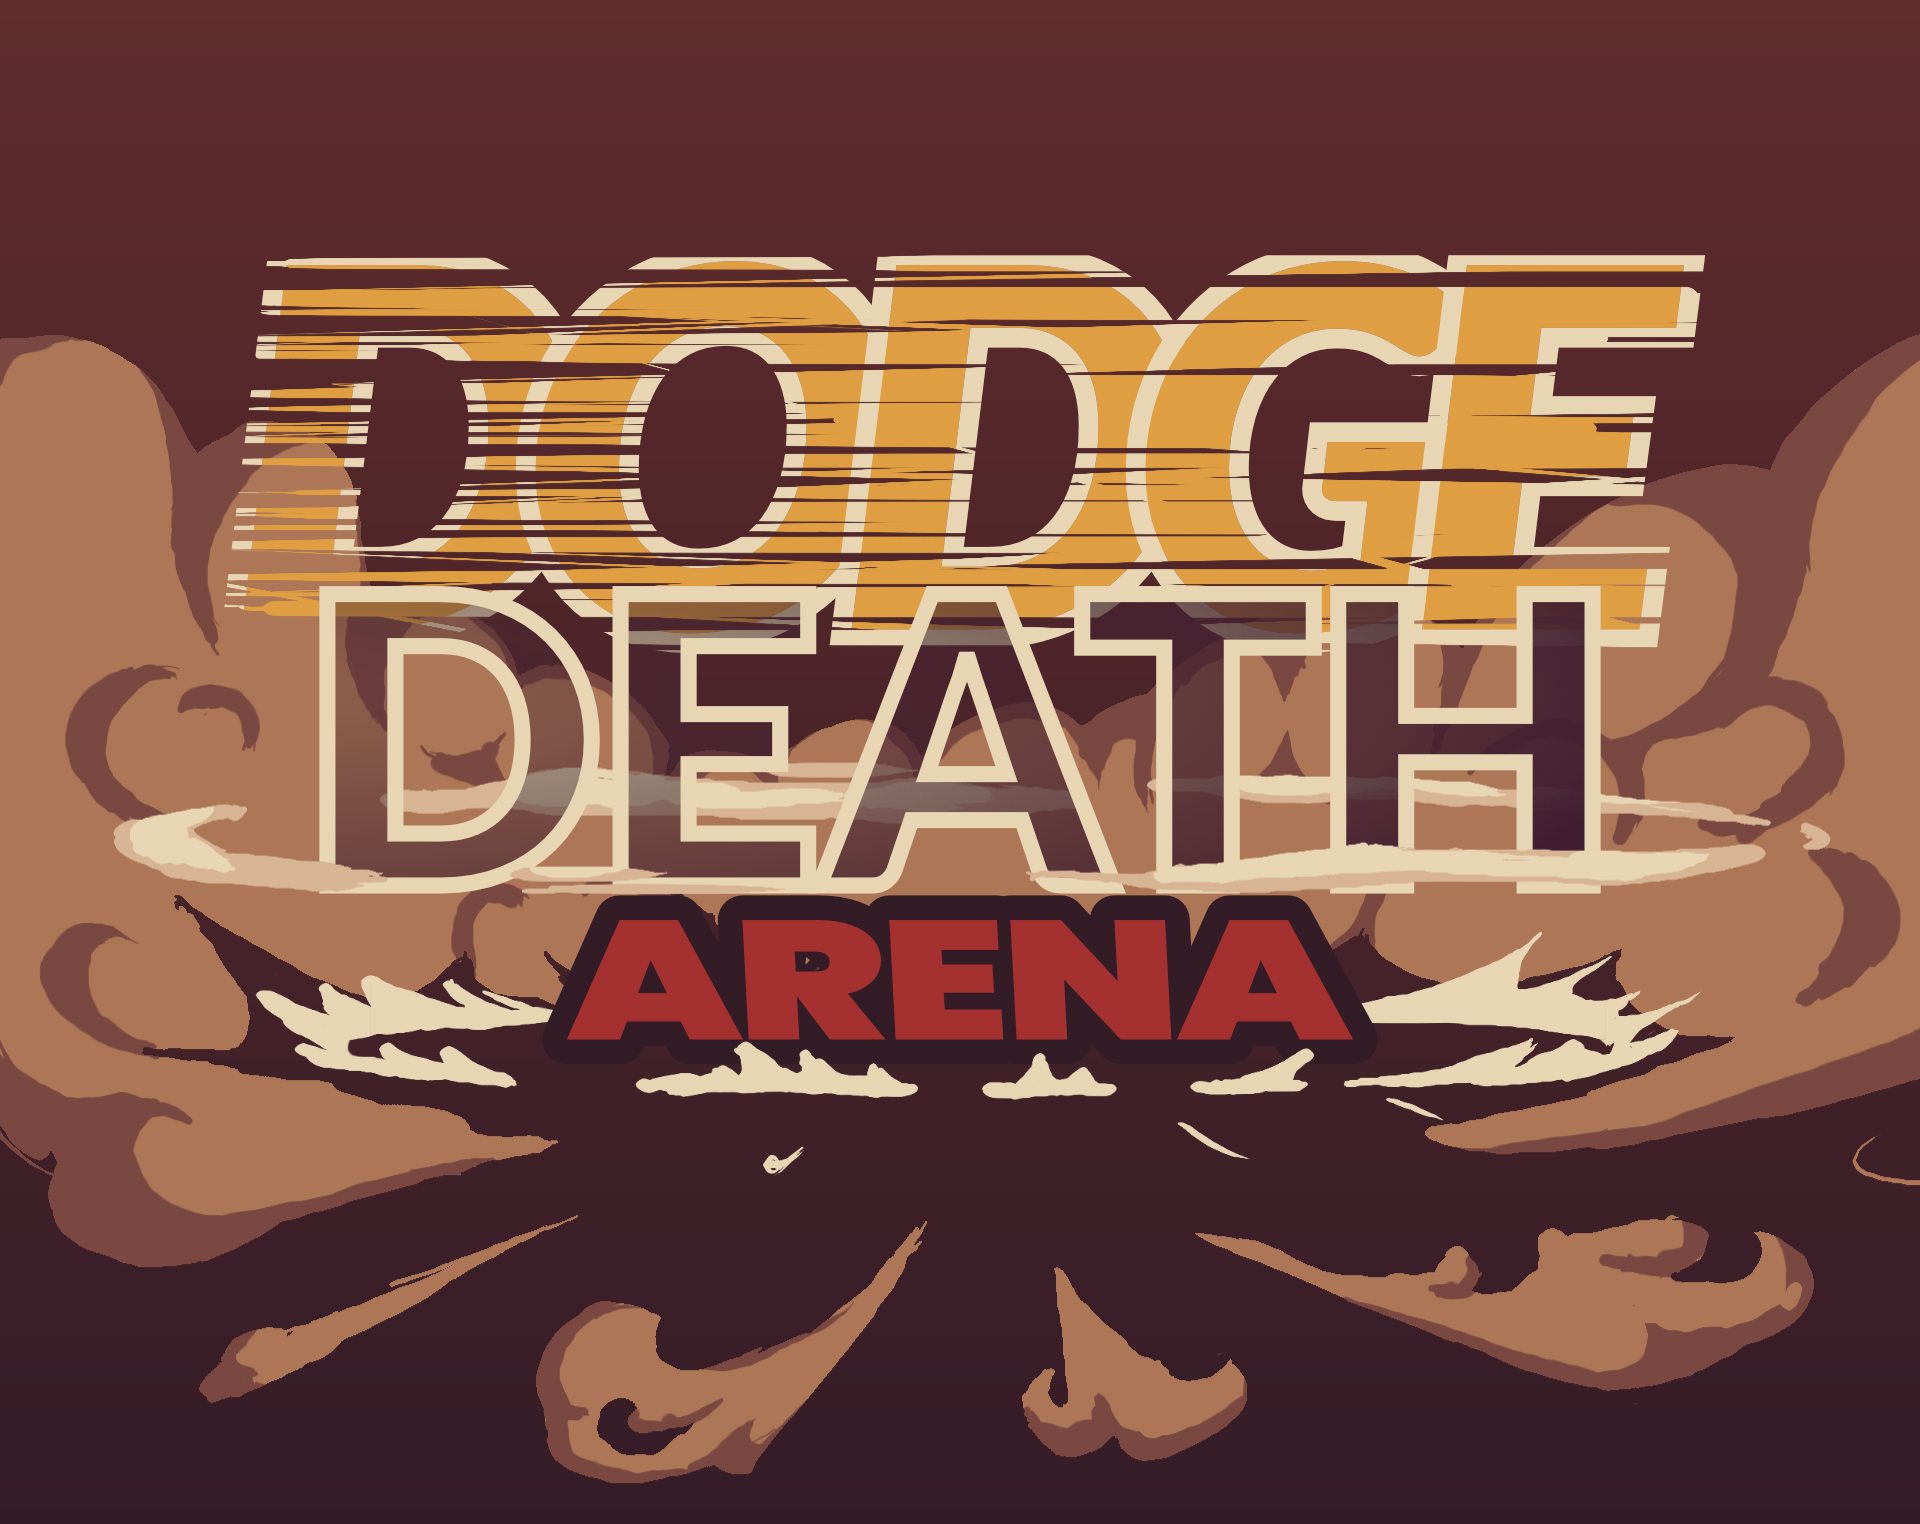 Dodge Death Arena